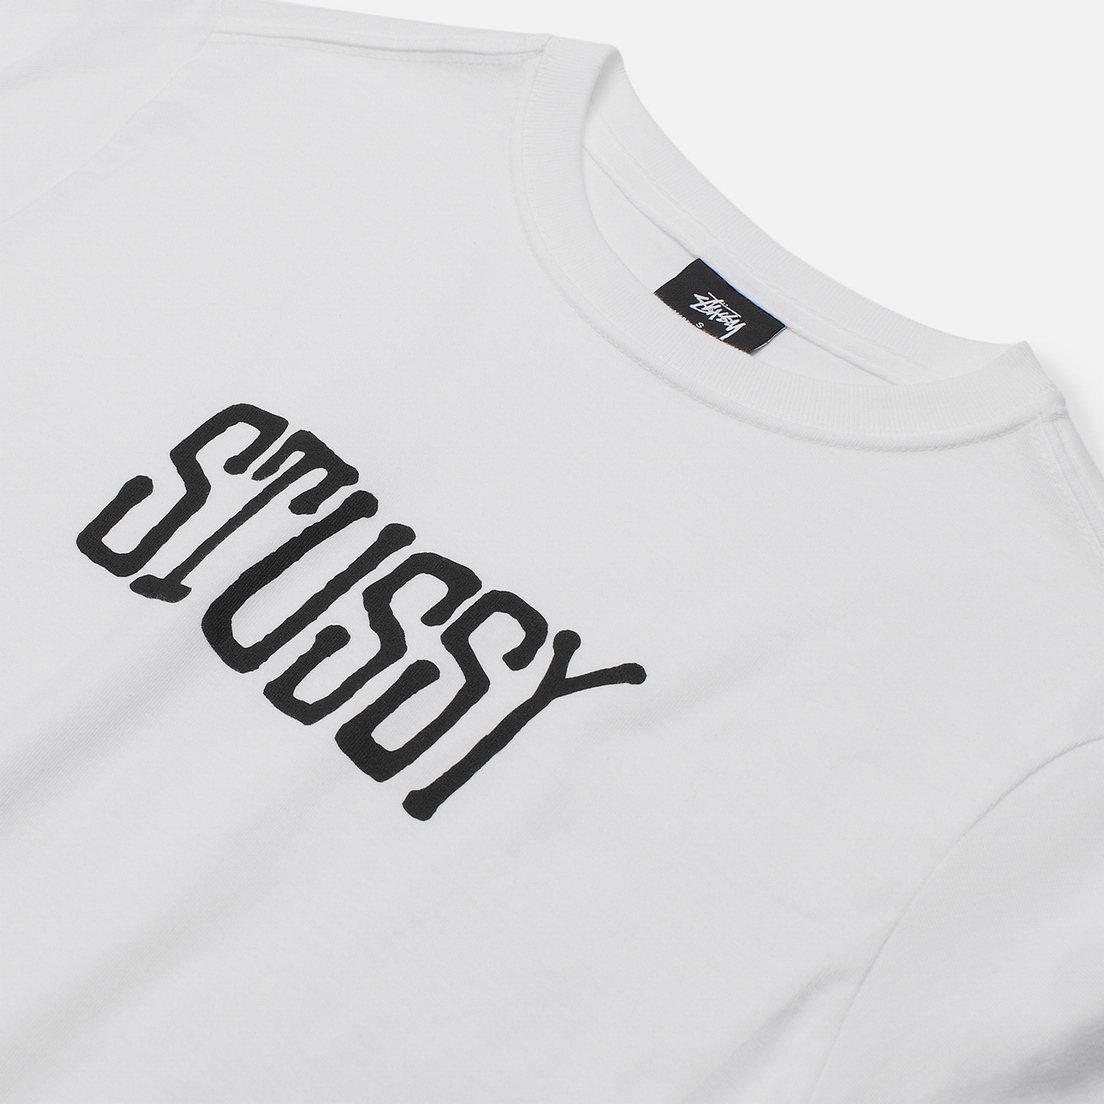 Stussy Женская футболка OG Stussy